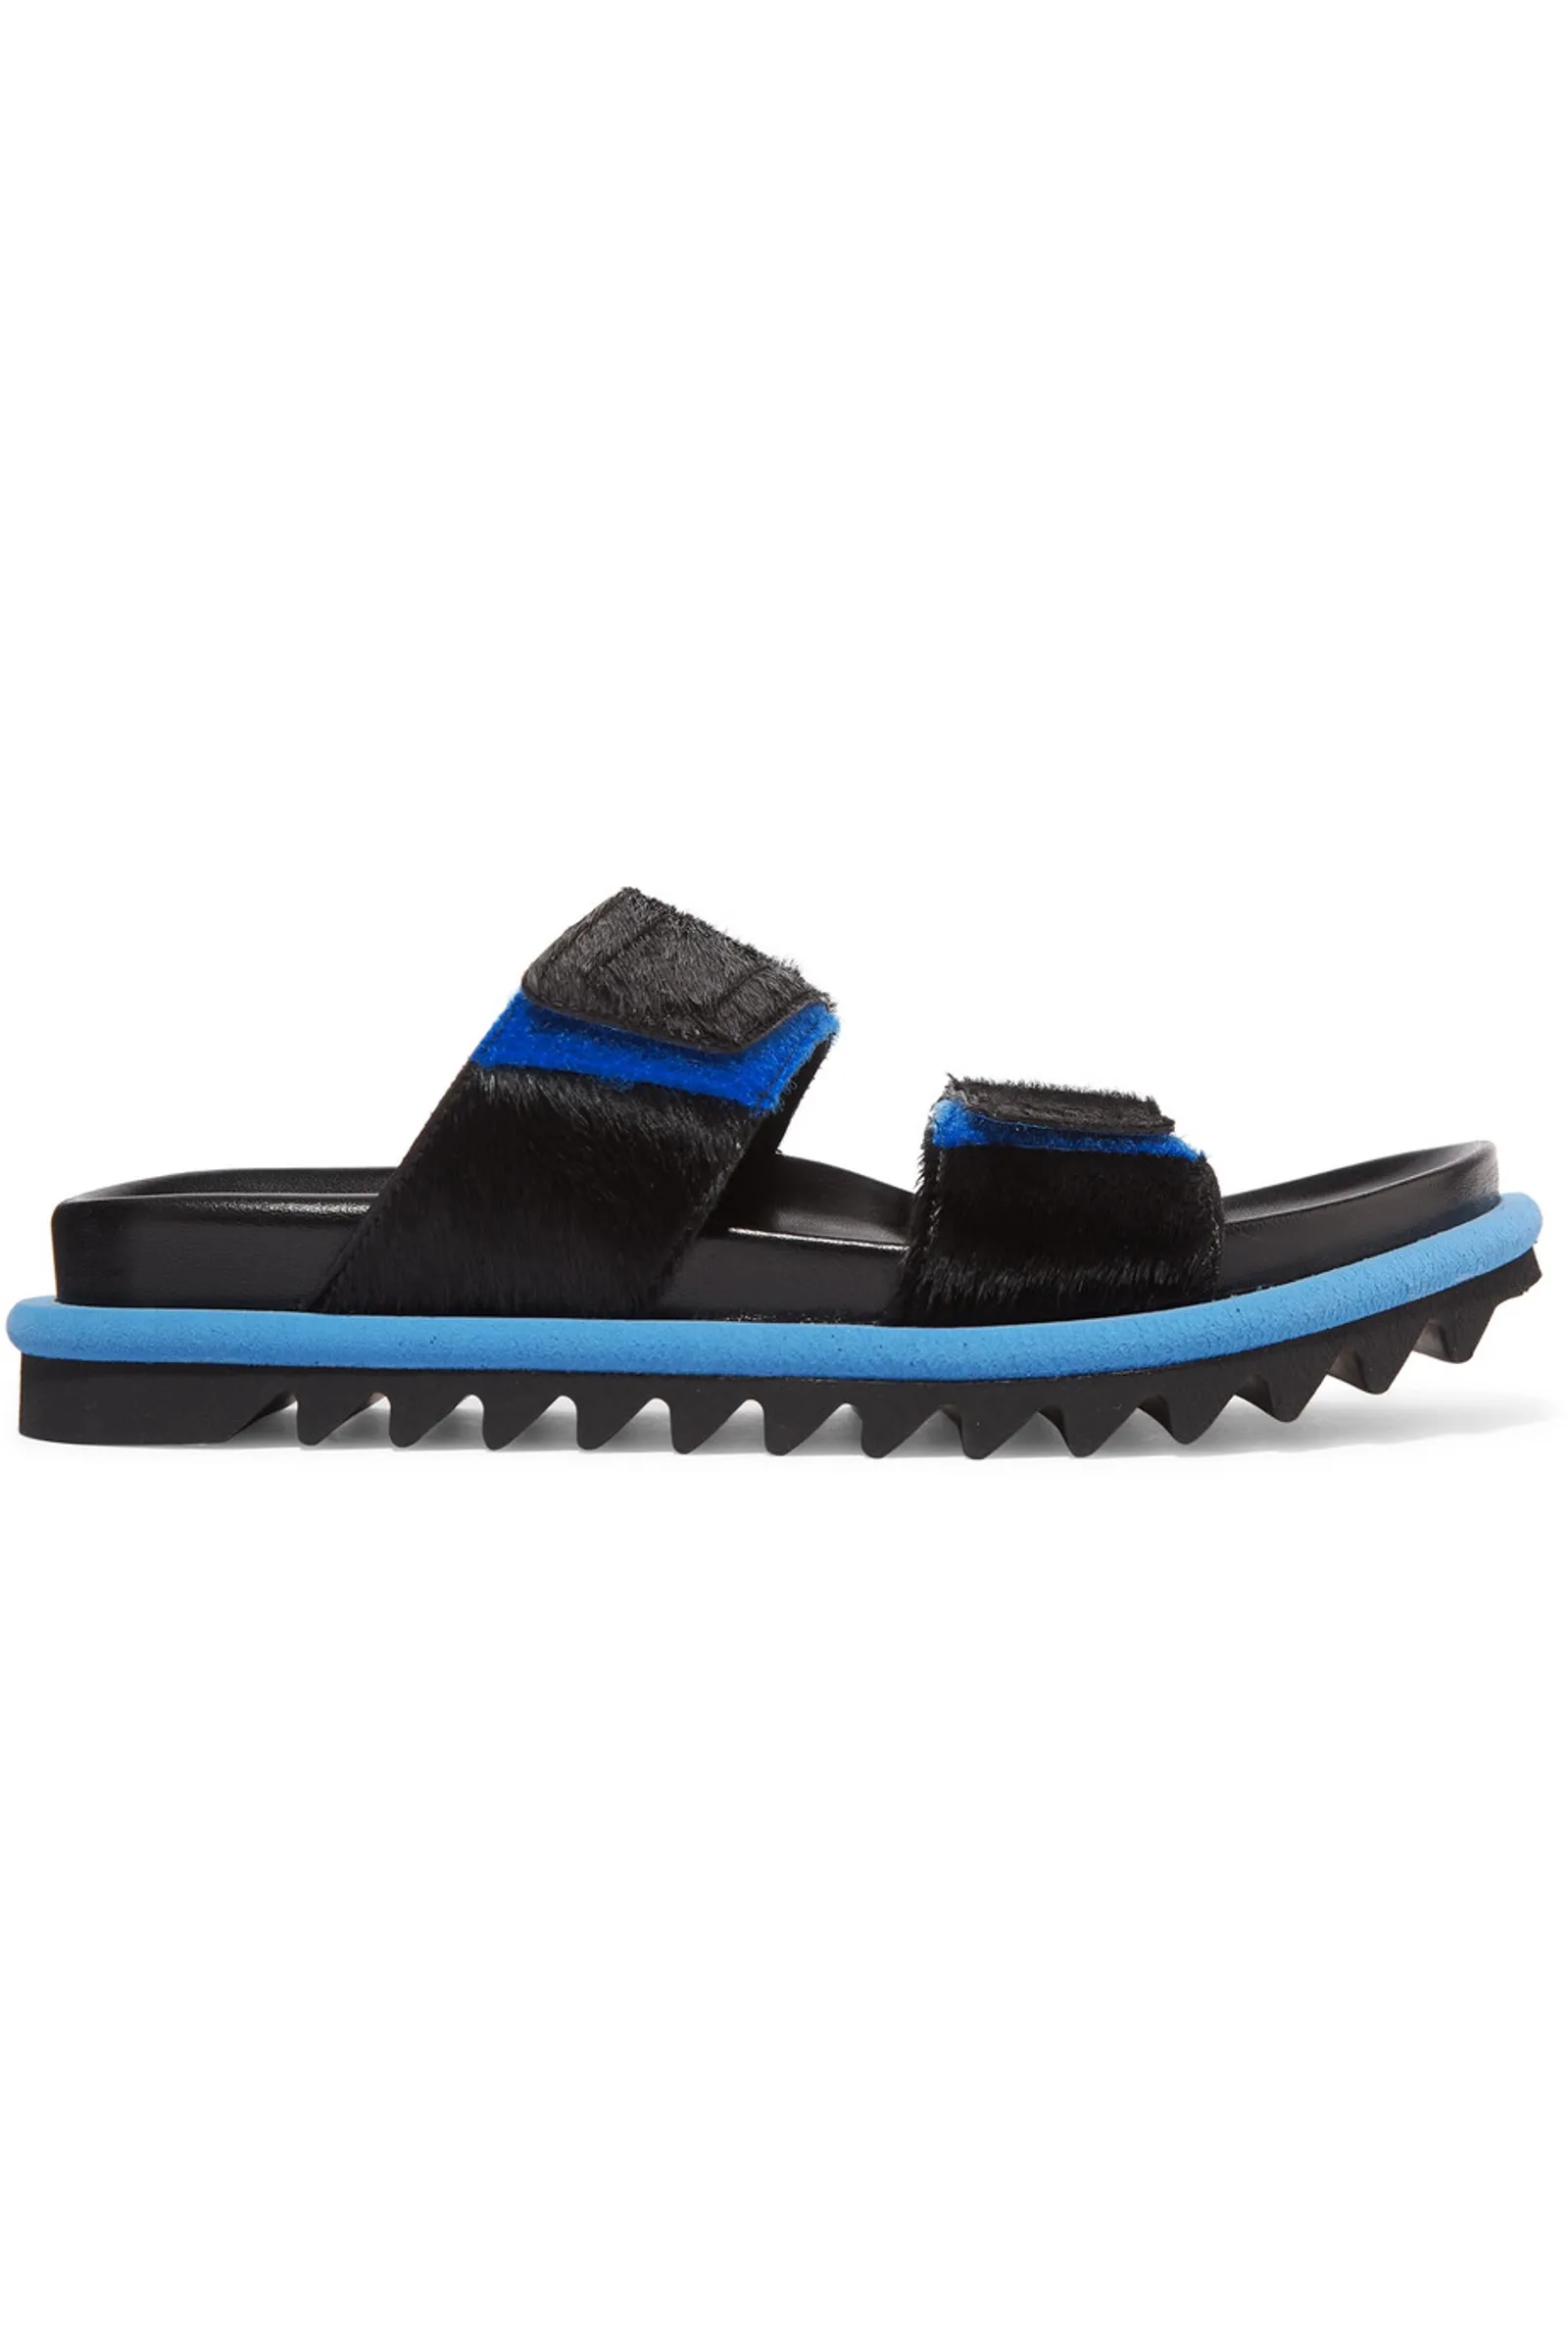 #PopbelaOOTD: Sandal Musim Panas yang Fun